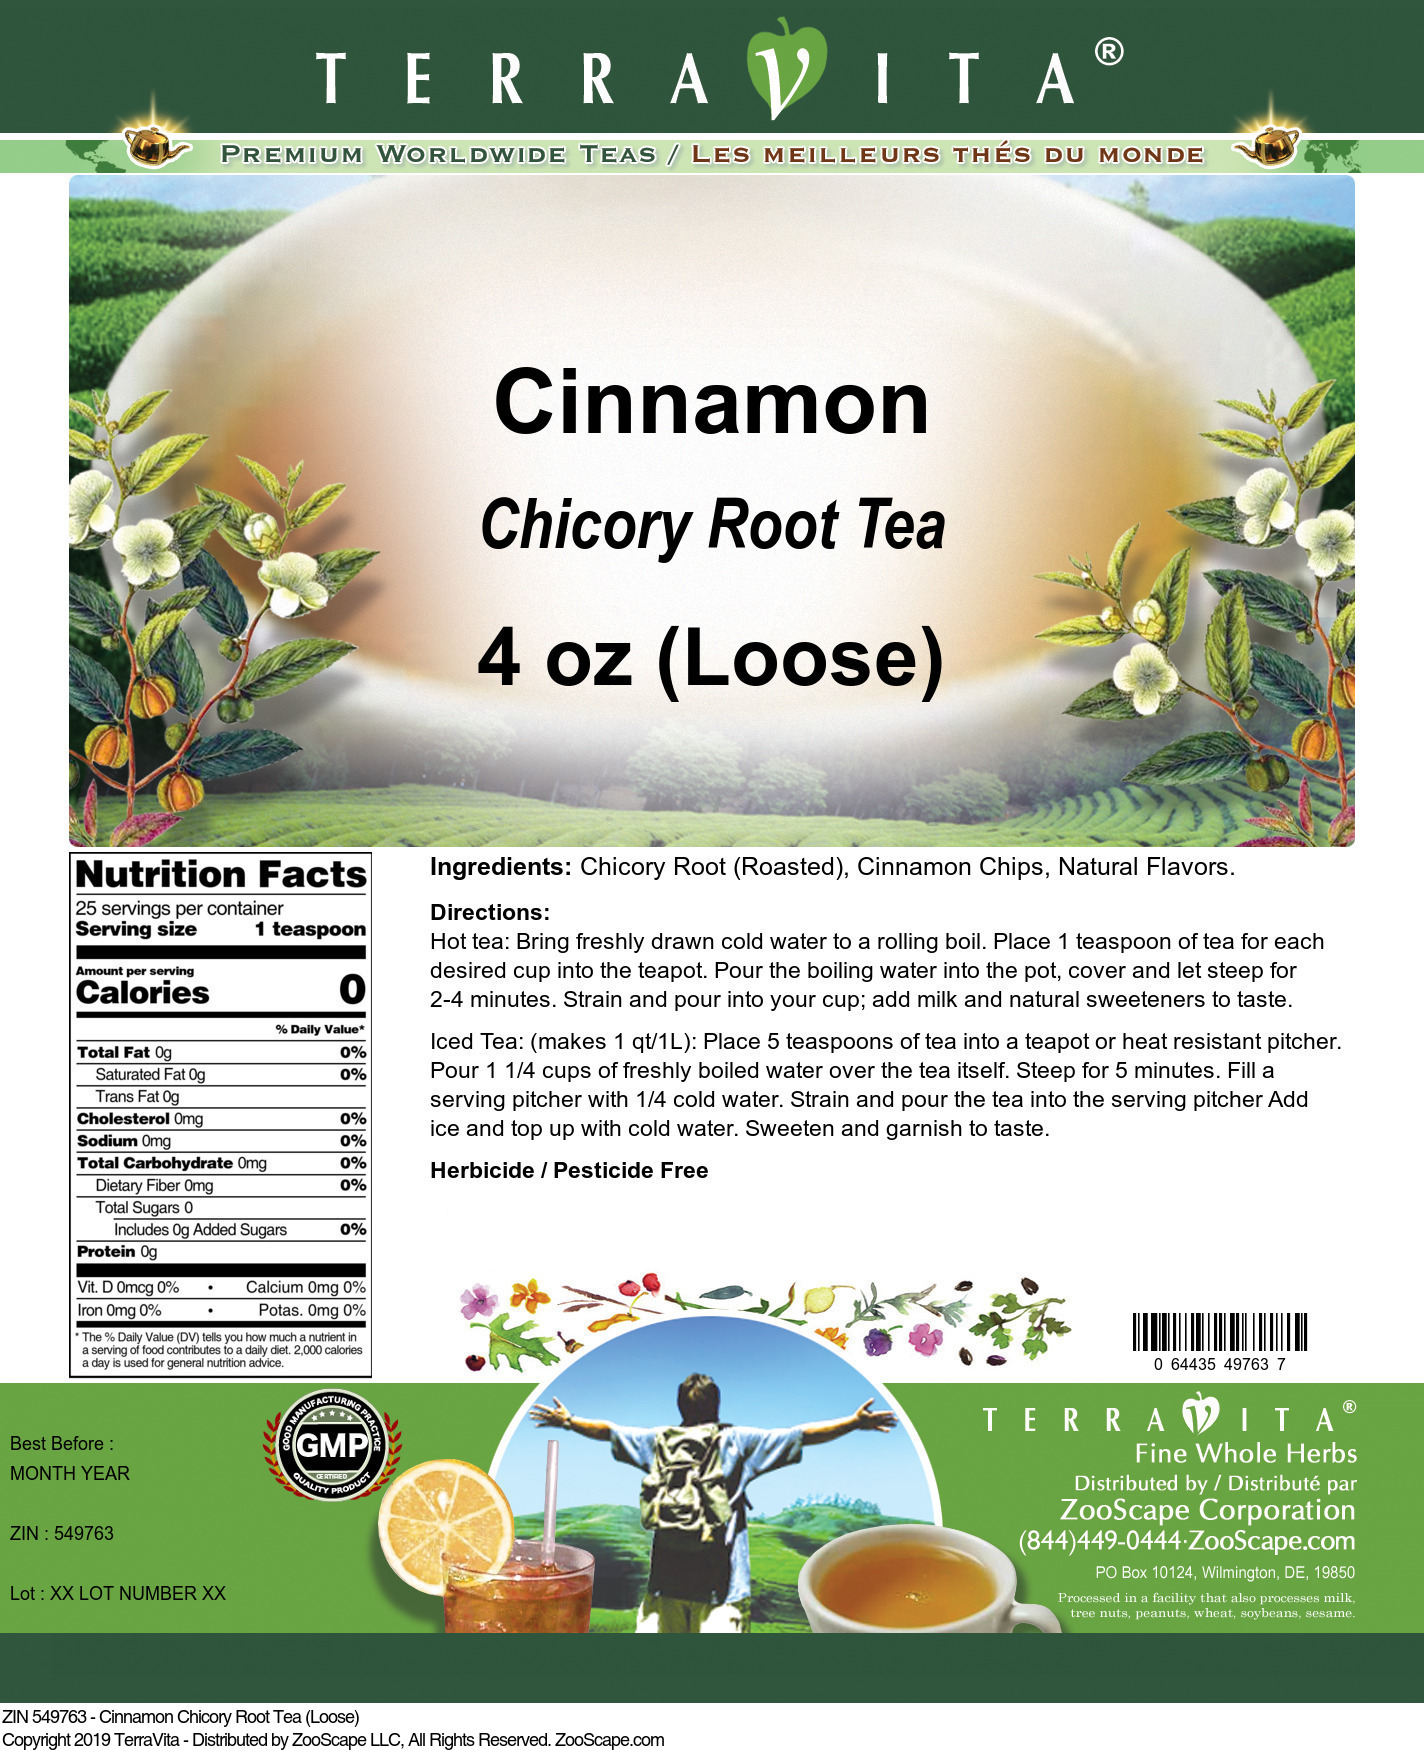 Cinnamon Chicory Root Tea (Loose) - Label